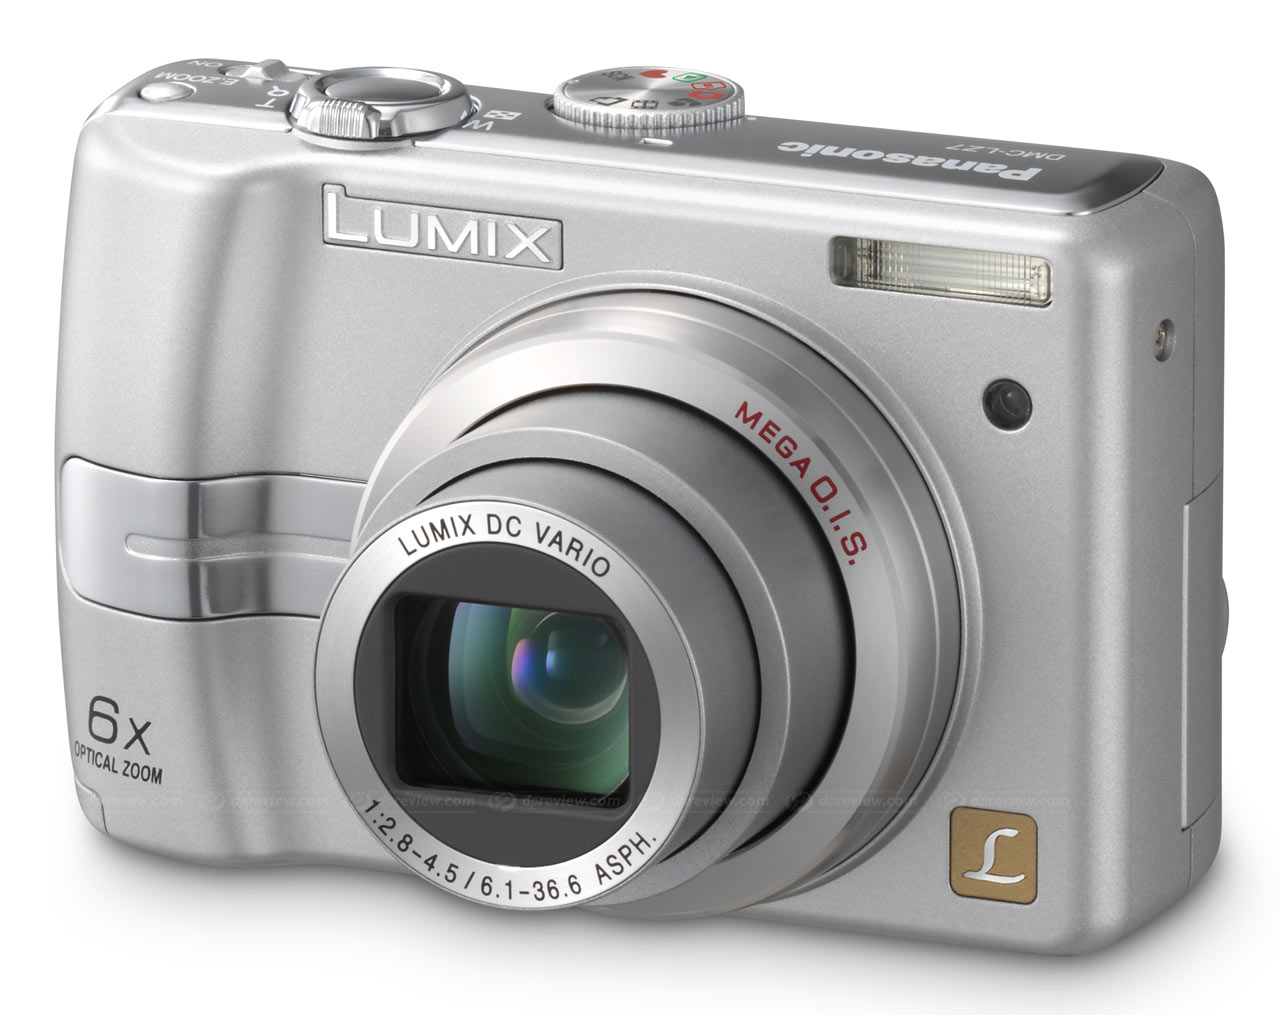 Panasonic Lumix DMC-LZ6 Digital Camera